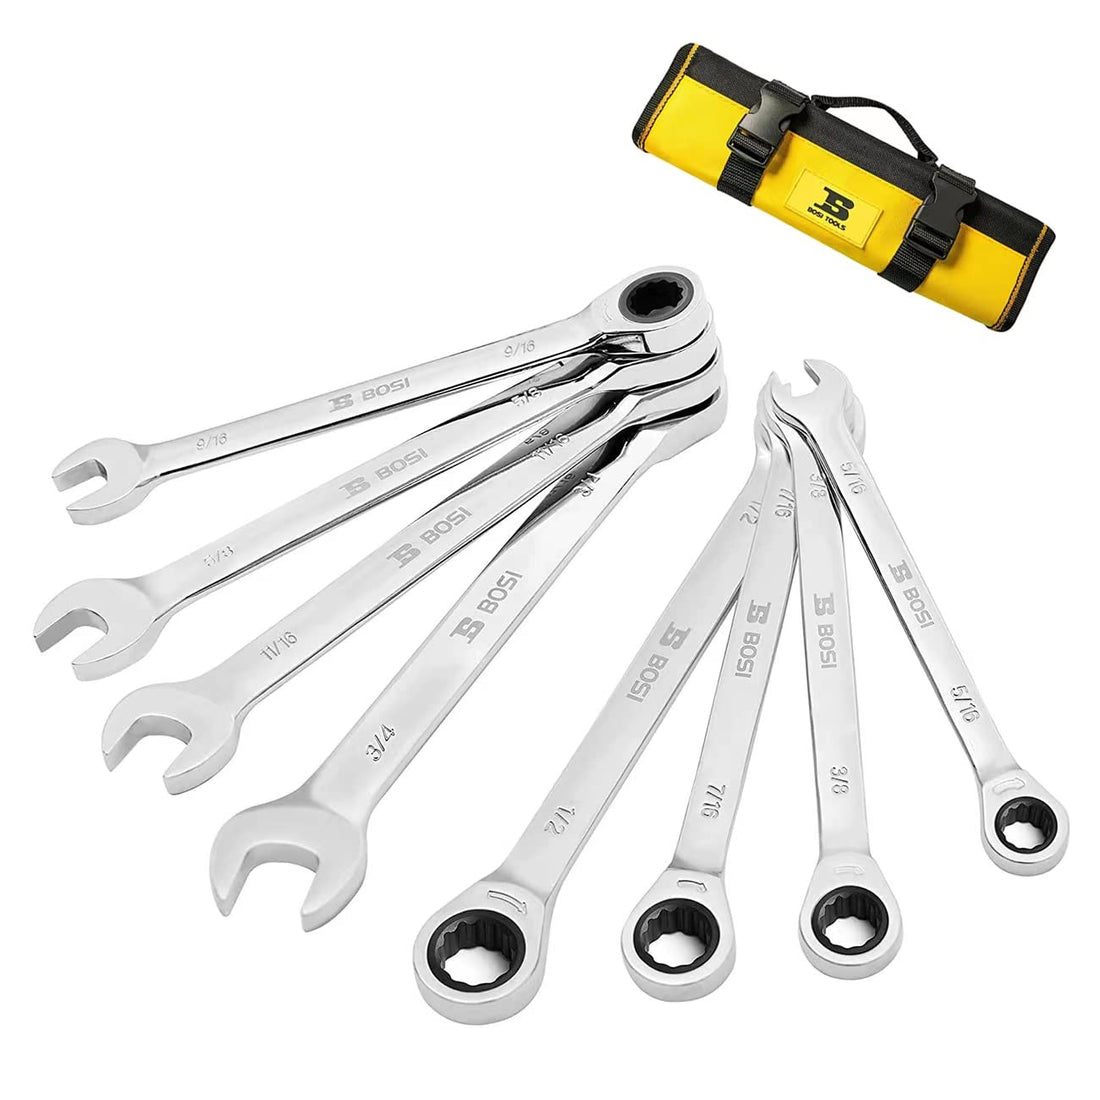 B BOSI TOOLS Ratcheting Wrench Set, SAE, 8-Piece, 5/16'', 3/8'', 7/16'', 1/2'', 9/16'', 5/8'', 11/16'', 3/4'', Chrome Vanadium steel, with Carrying Bag